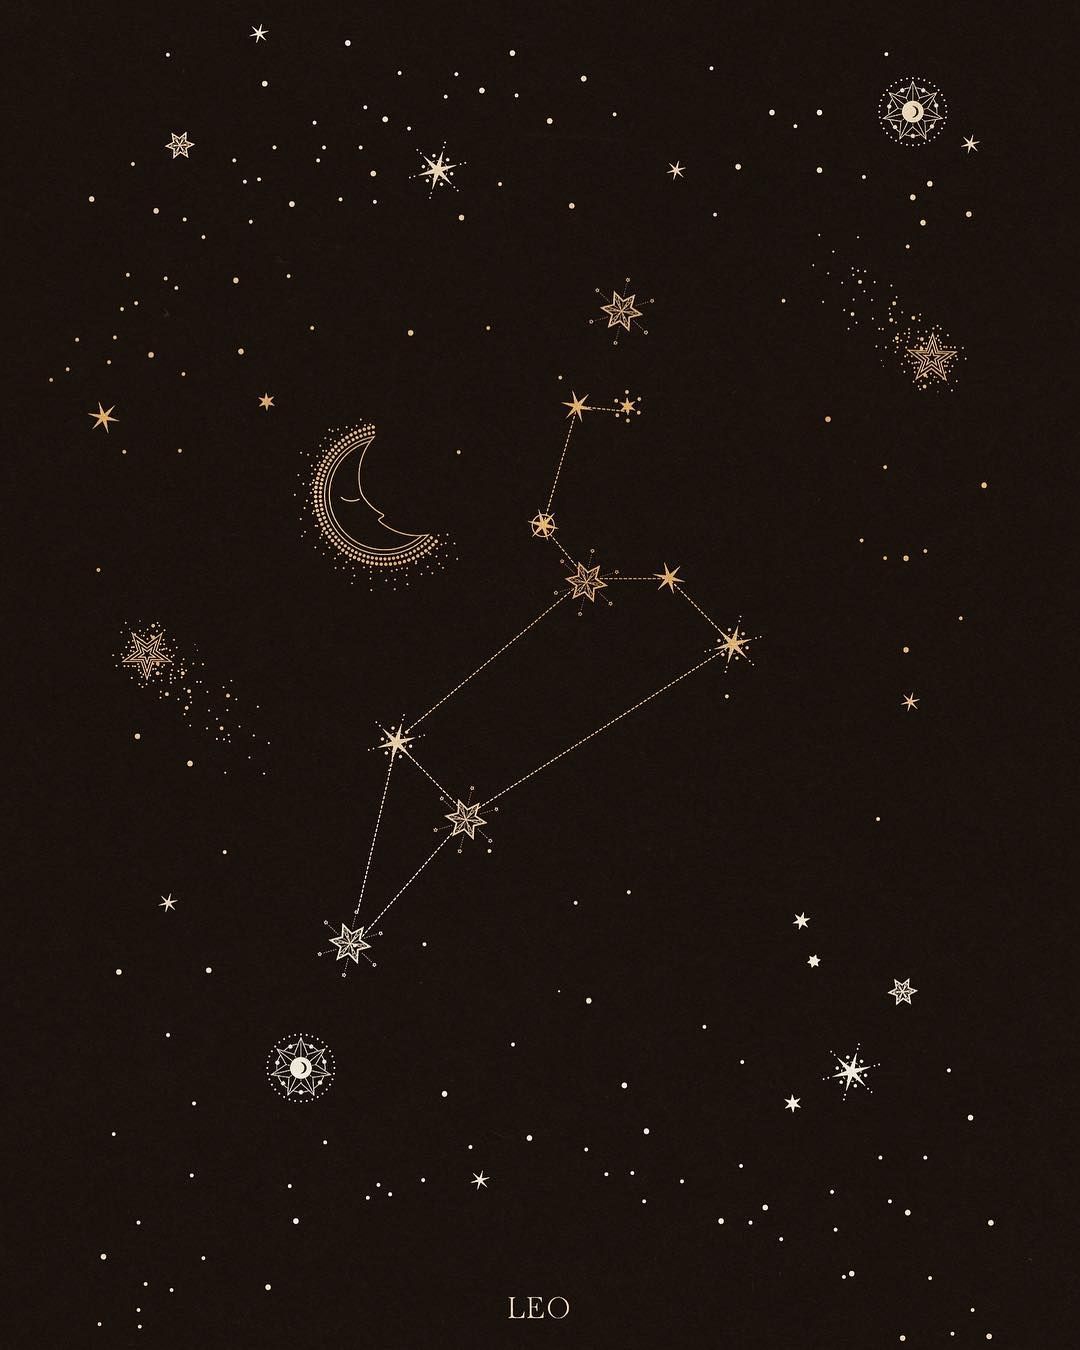 Aesthetic. Leo constellation